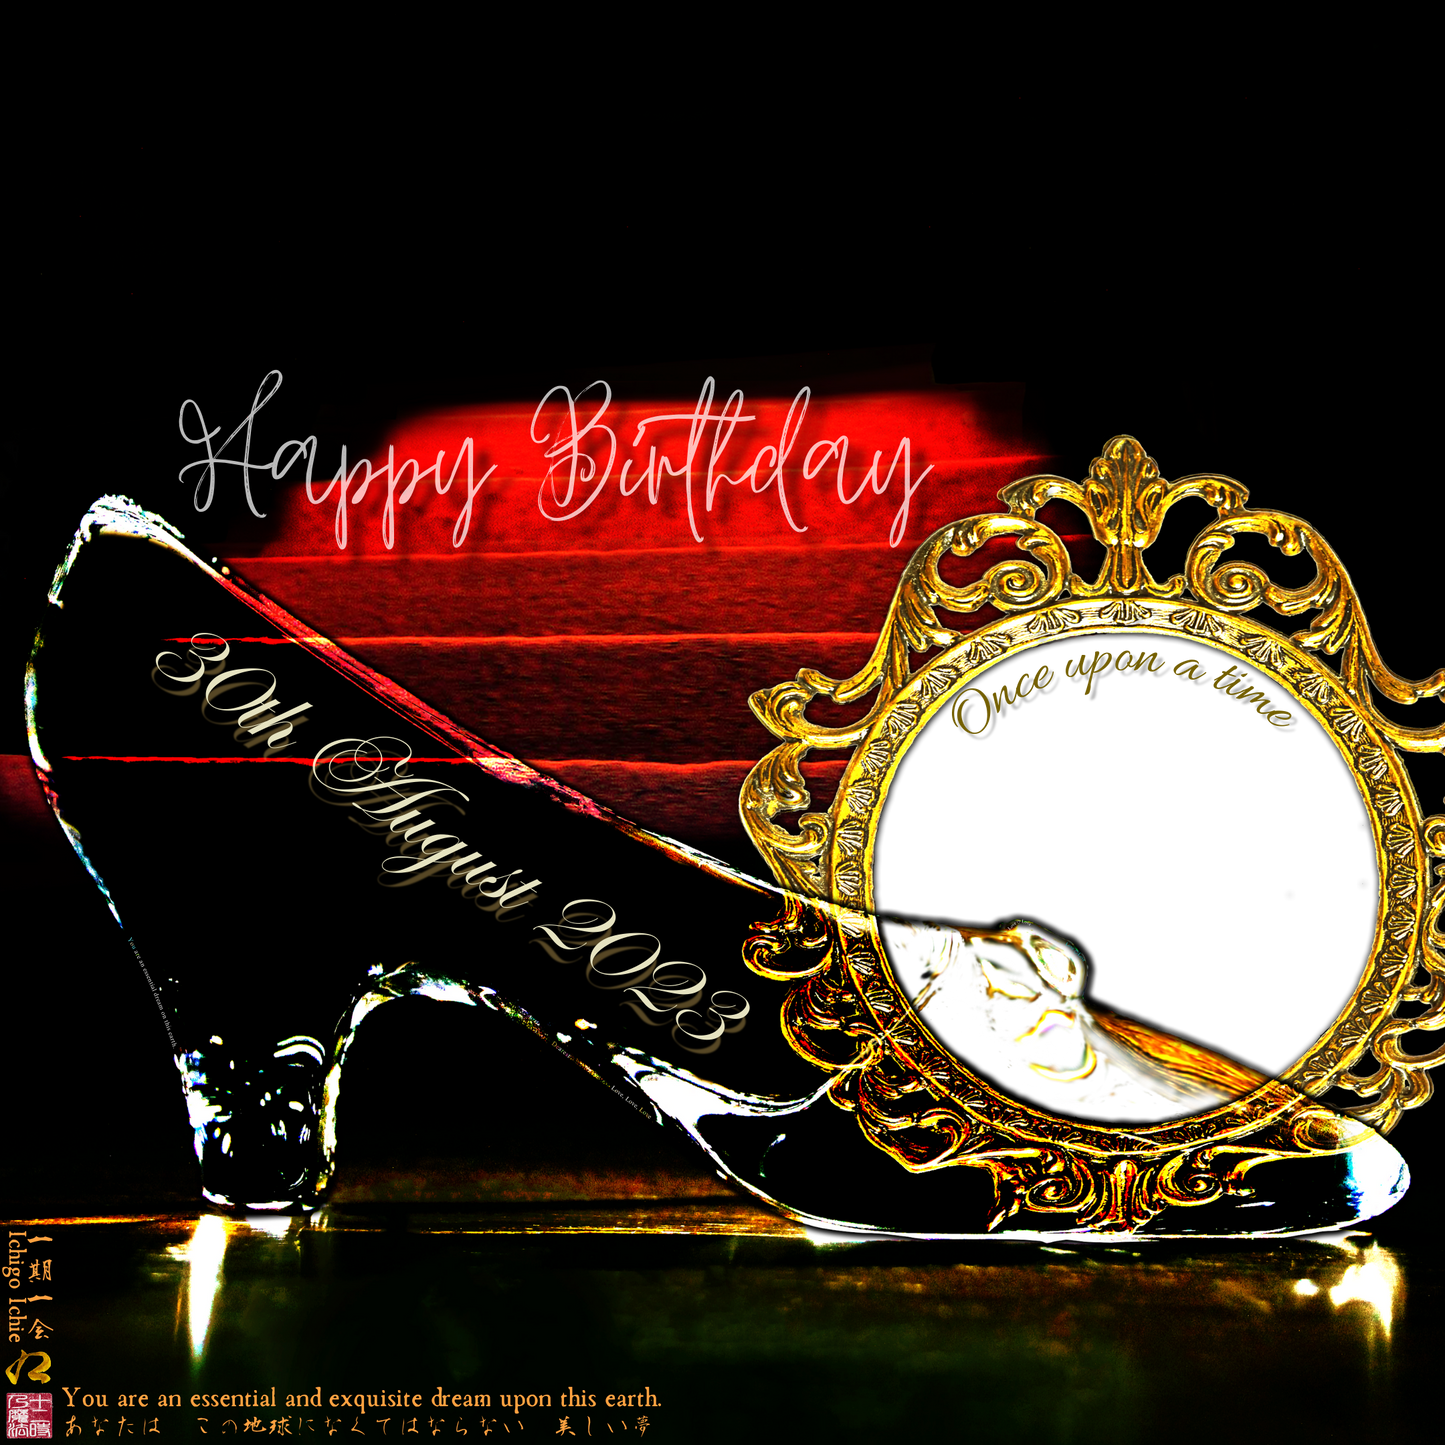 Happy Birthday Glass Slipper "Ichigo Ichie" 30th August 2023 the Right (1-of-1) NFT Art